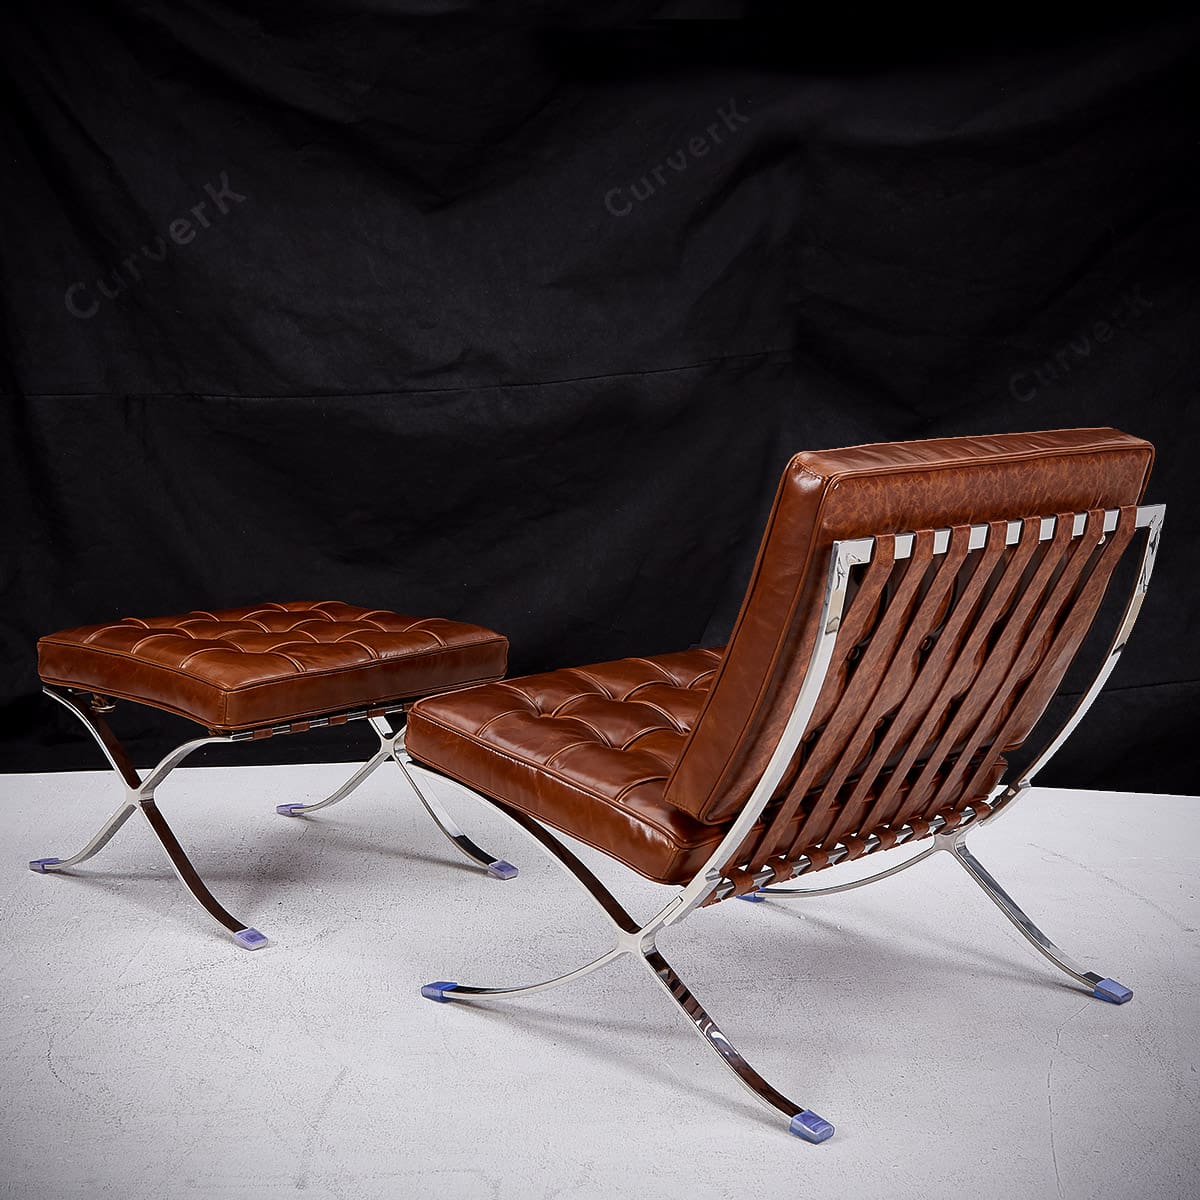 Vintage glossy Tan Brown Barcelona chair